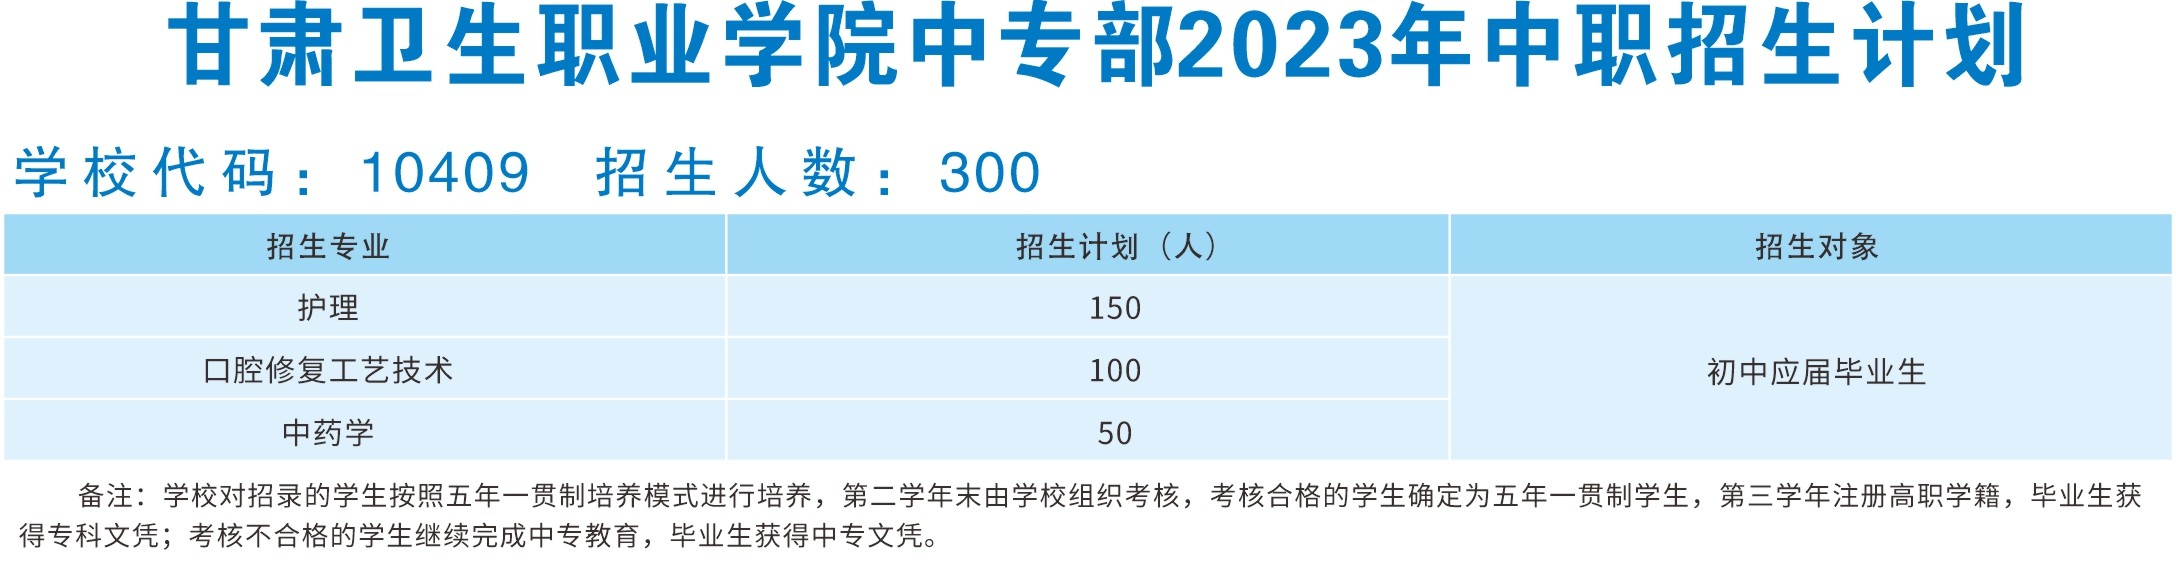 best365官网登录入口中专部2023年中职招生计划.jpg